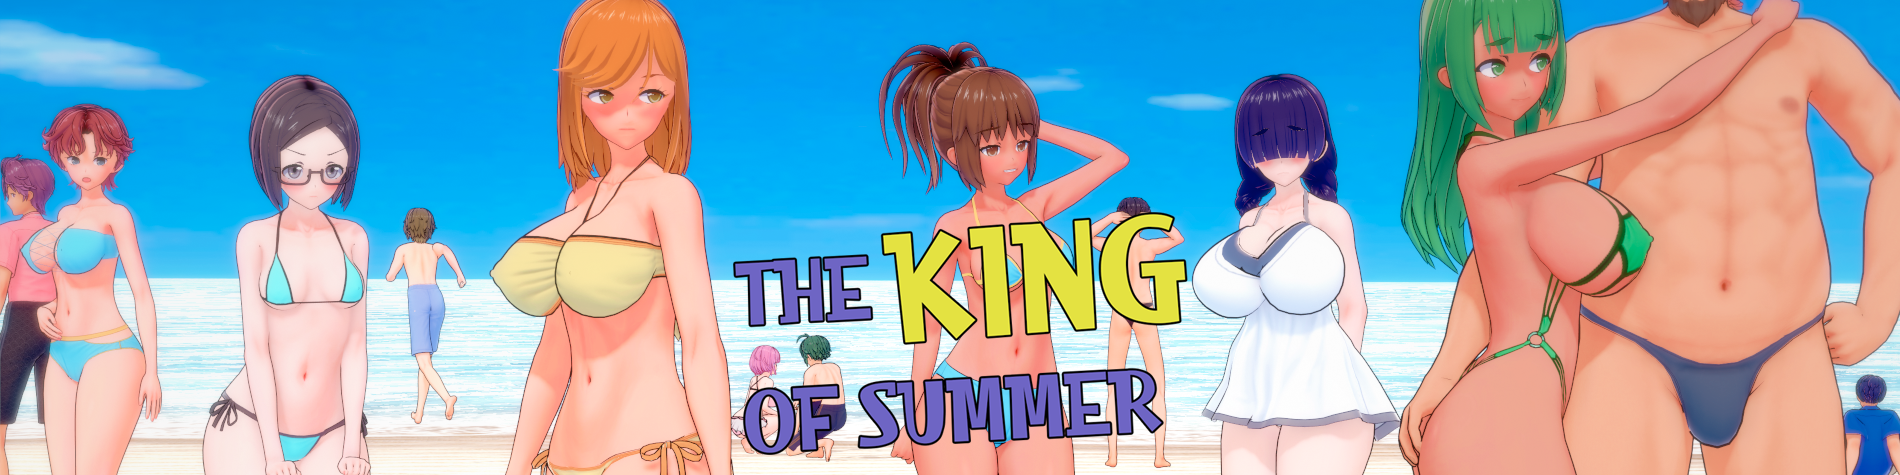 The King of Summer (18+) (v 0.4.4)